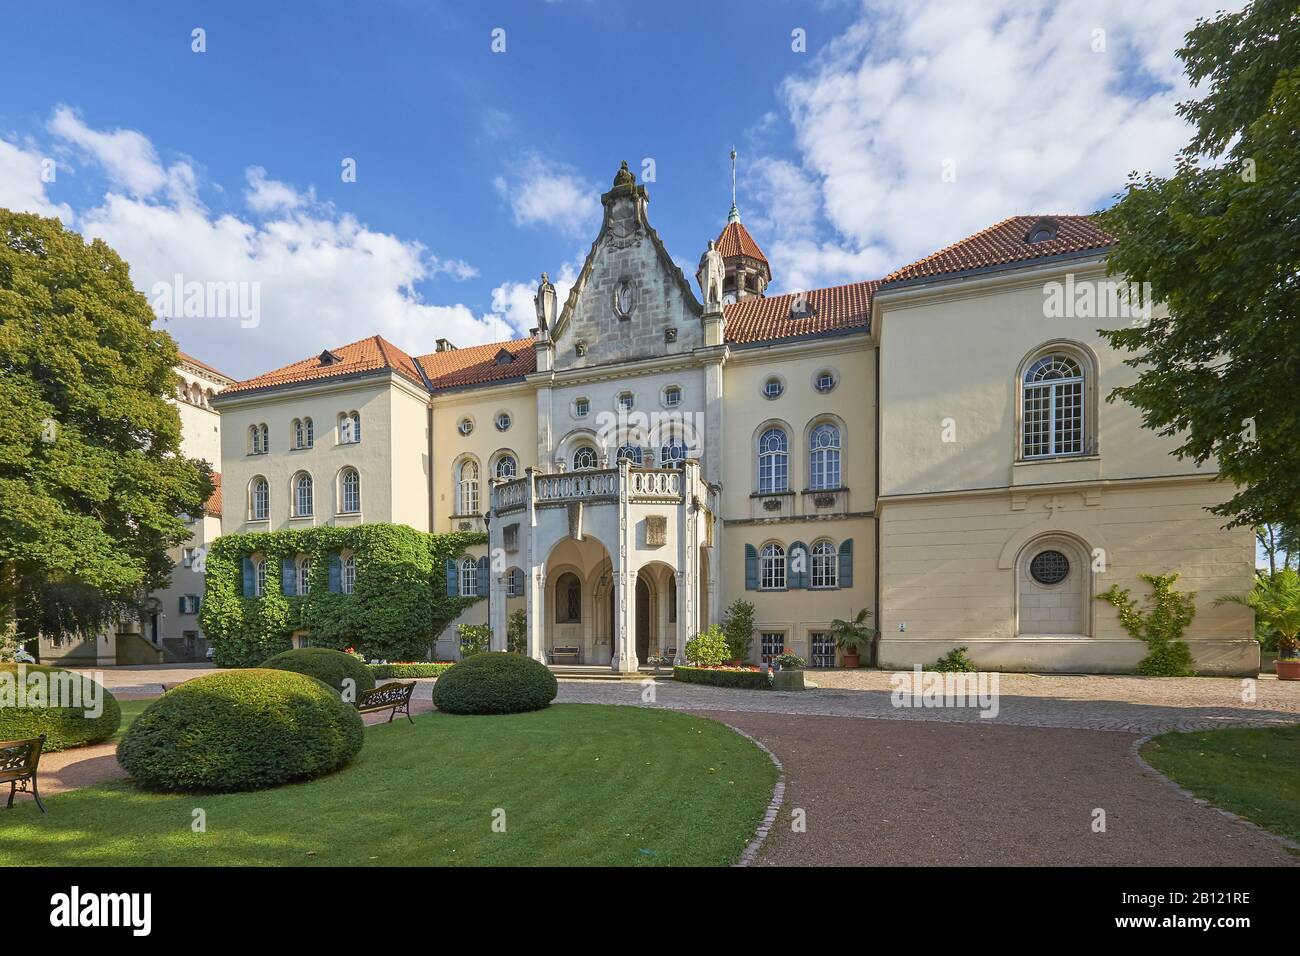 Waldenburg Castle in Waldenburg, Saxony, Germany Stock Photo